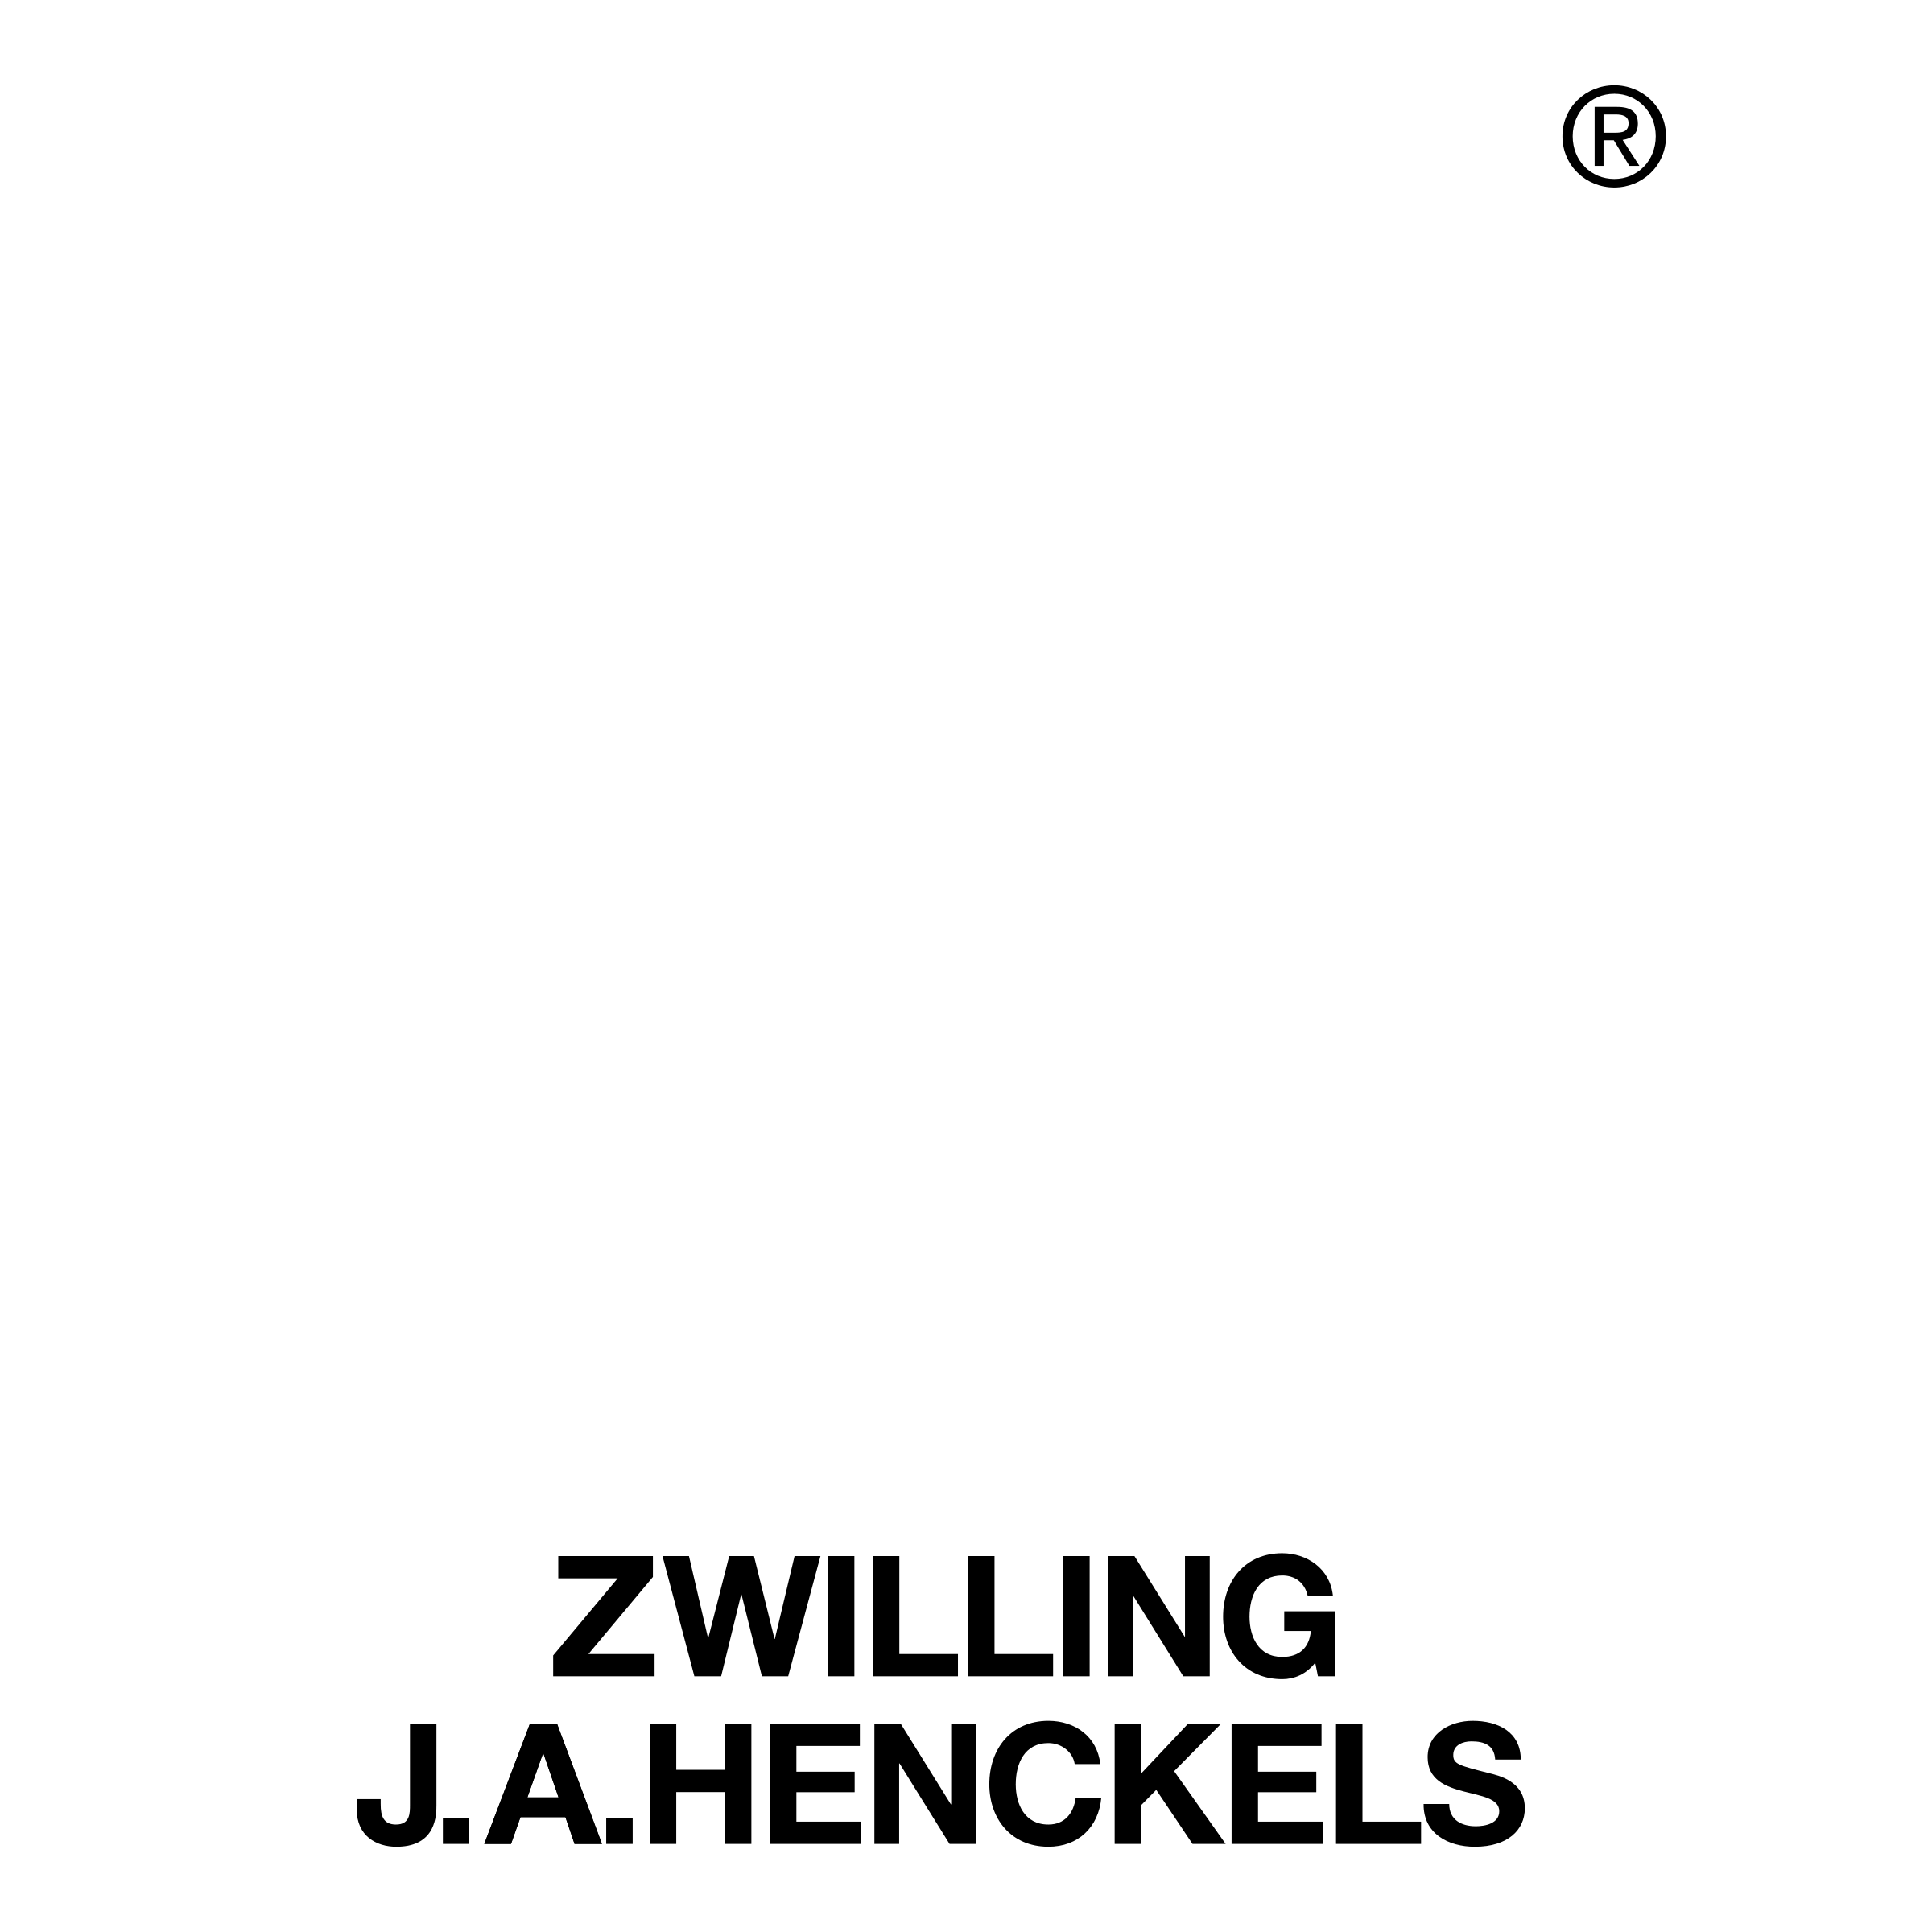 Henckels Logo - Zwilling J A Henckels Logo PNG Transparent & SVG Vector - Freebie Supply